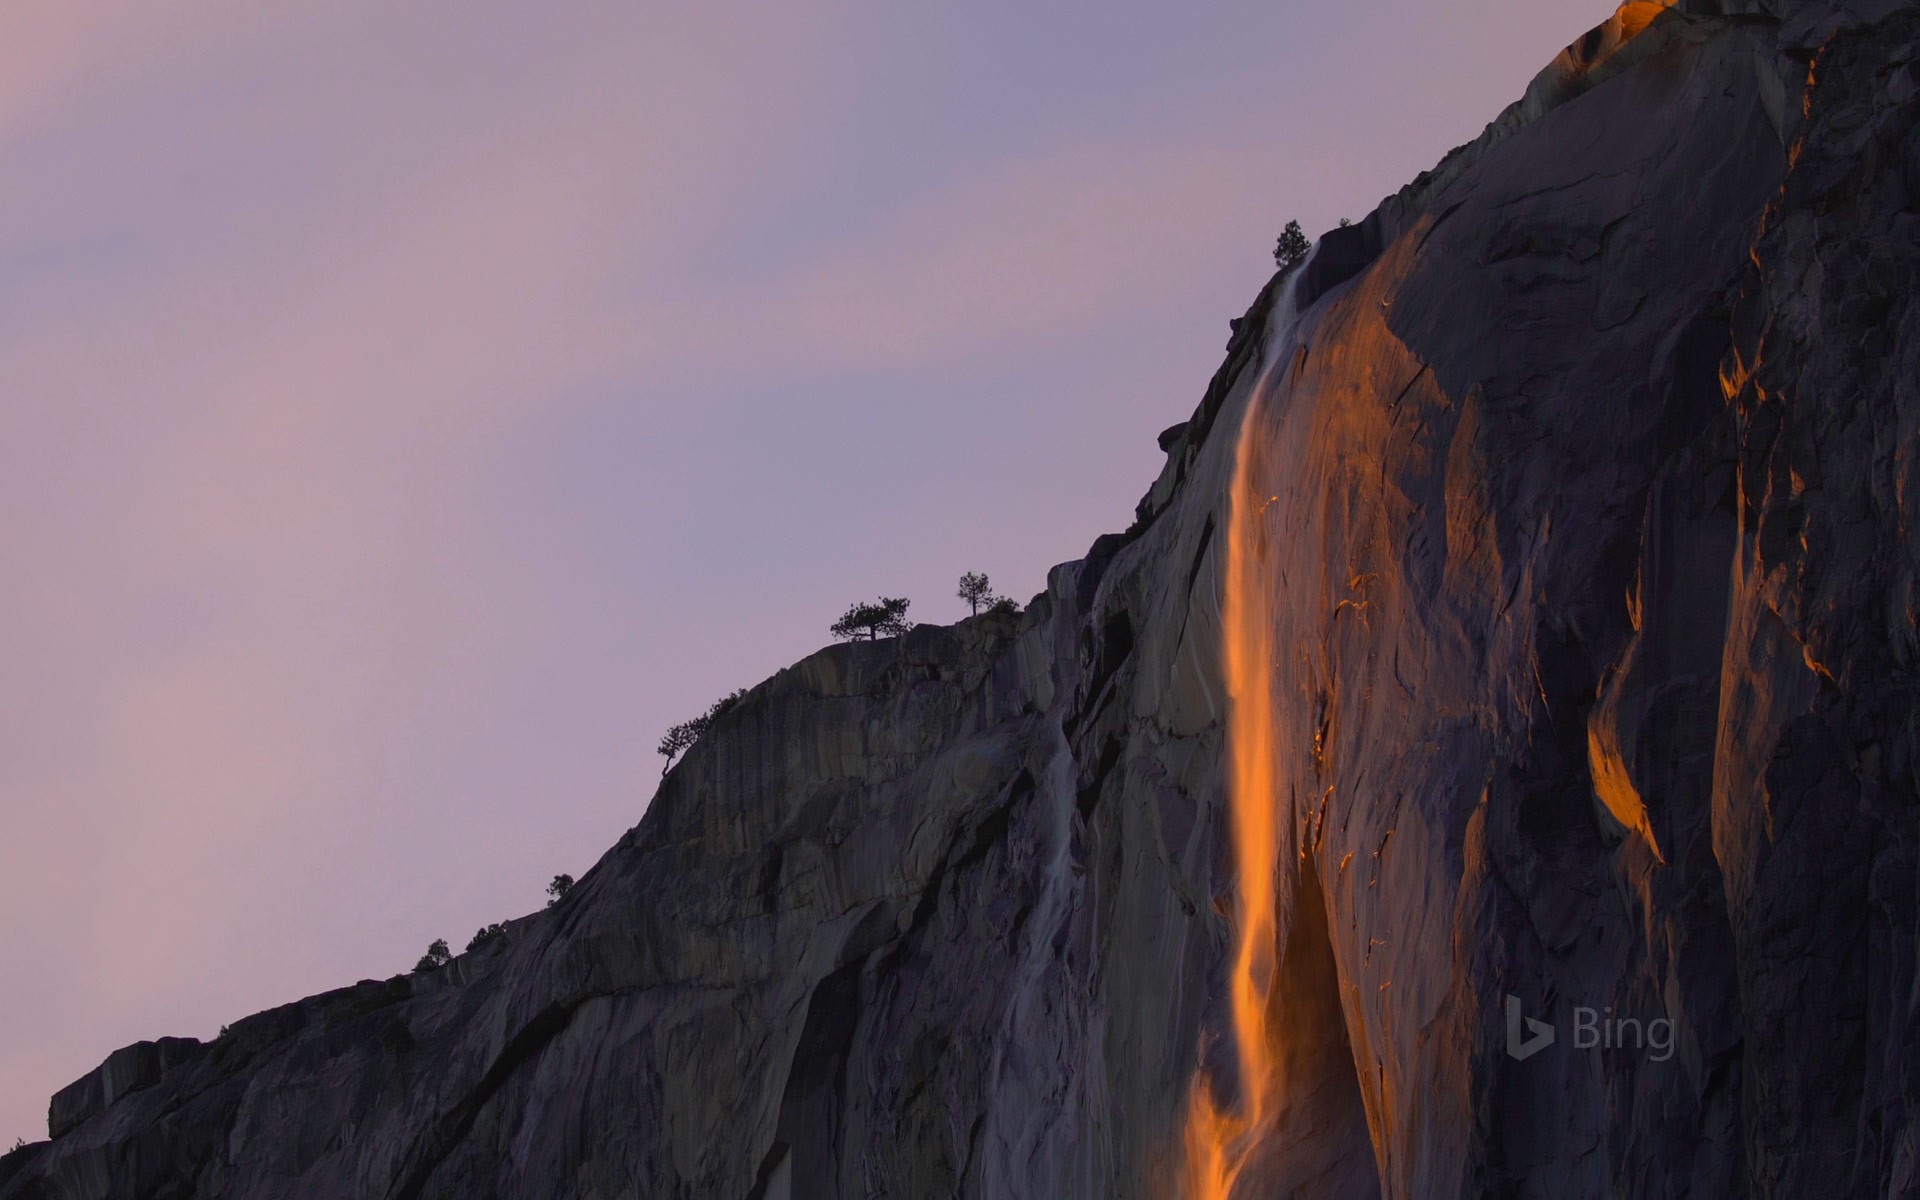 Firefall at Horsetail Fall, Yosemite National Park, California